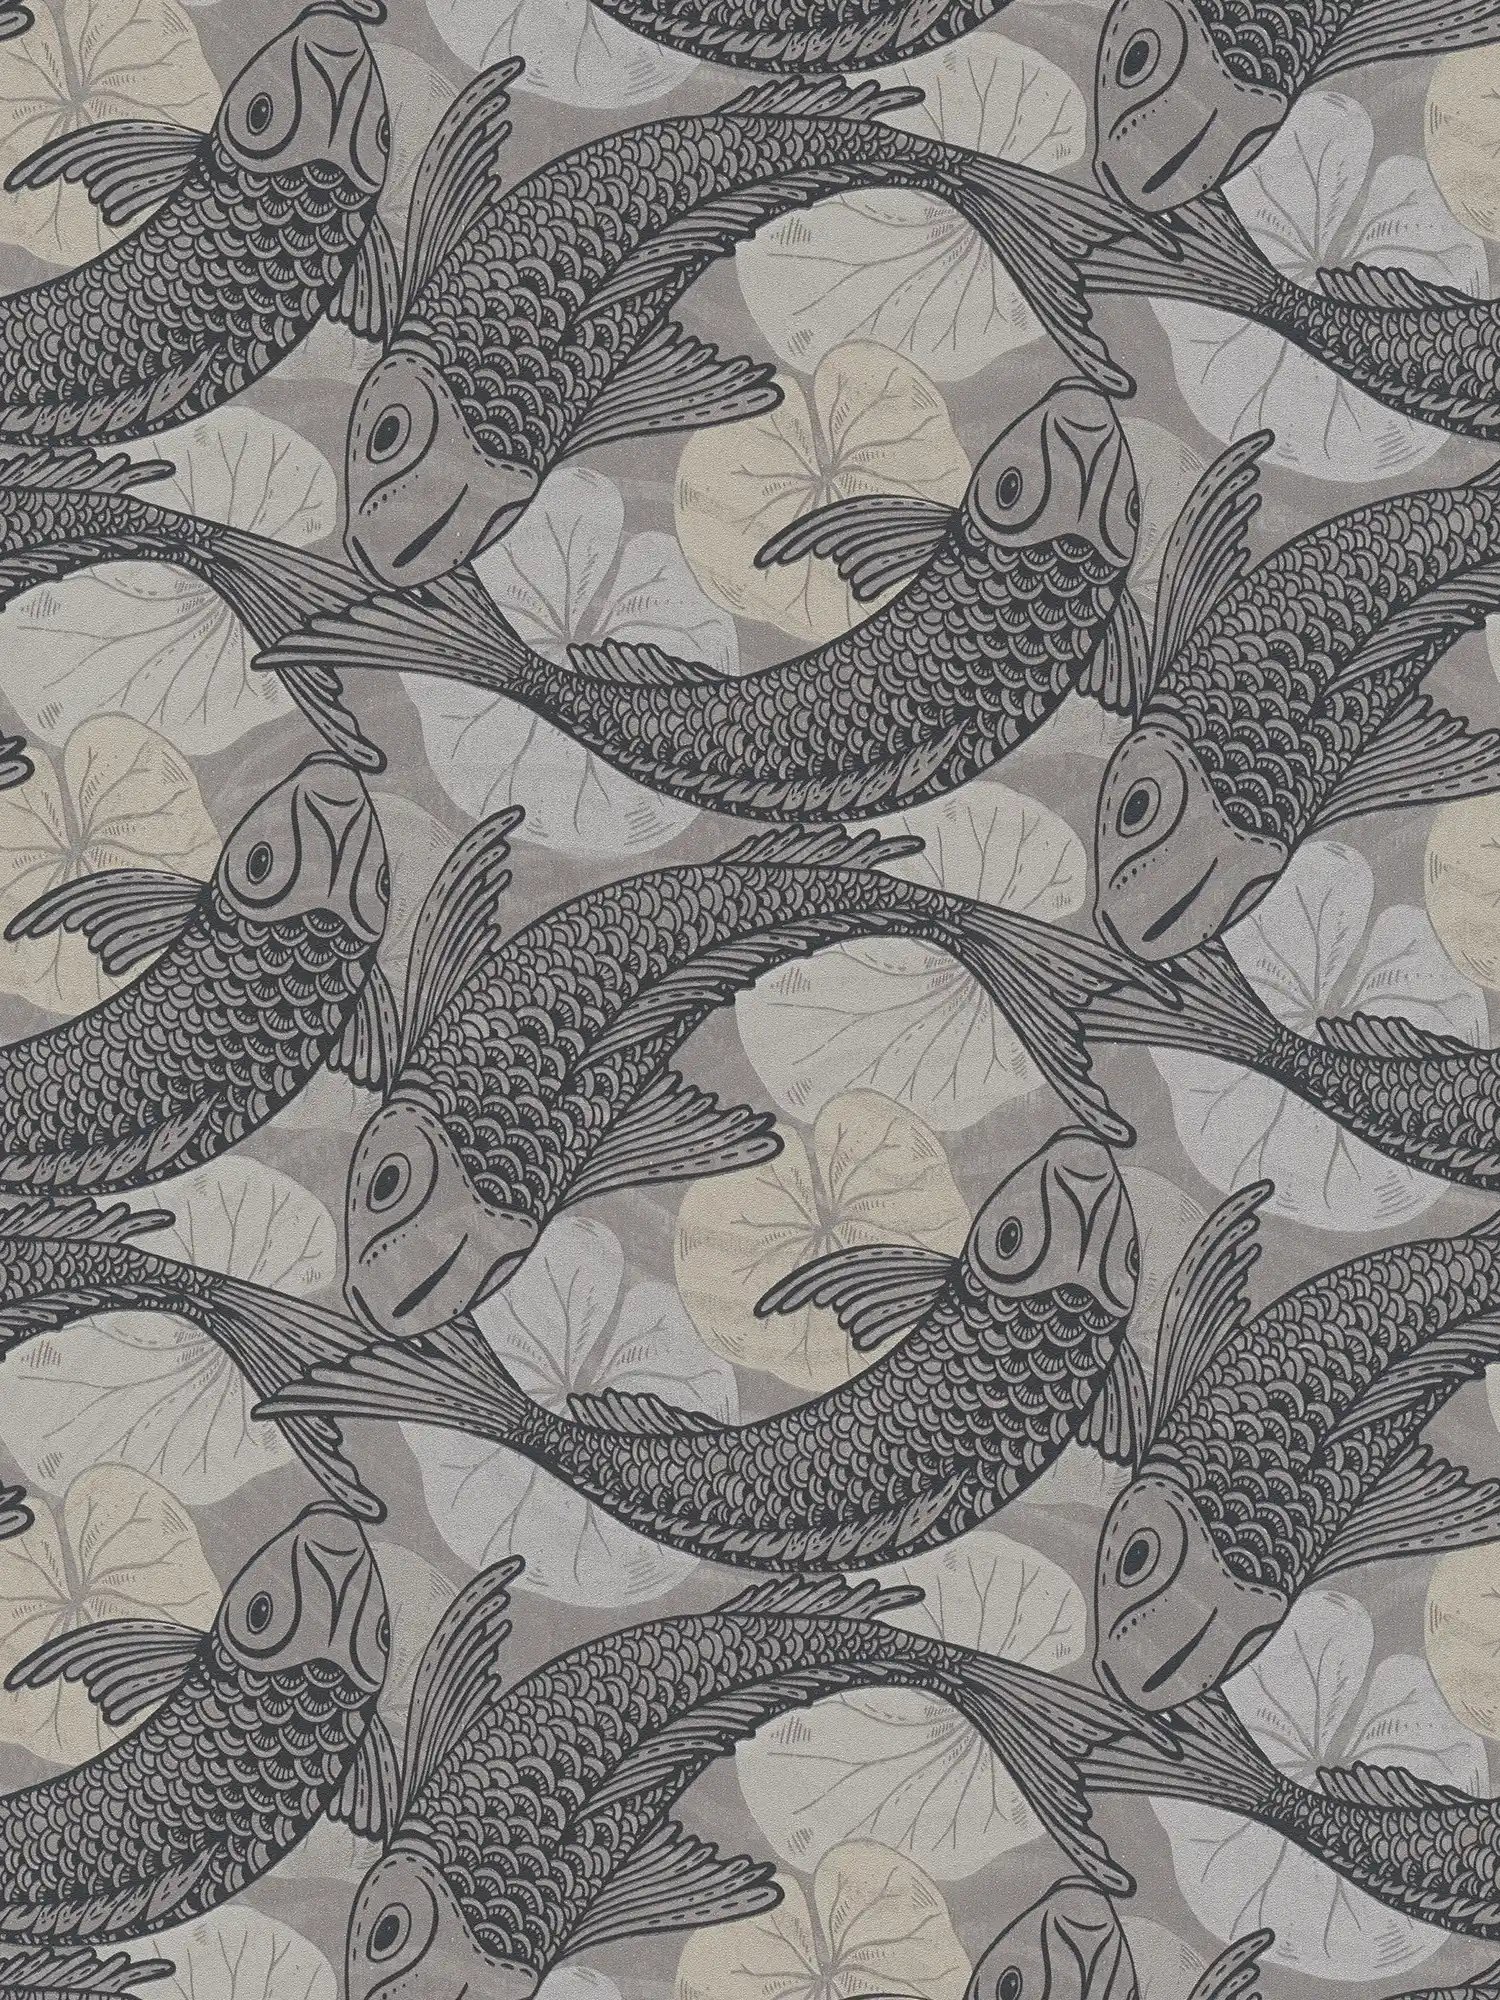 Wallpaper Asian design with koi motif & metallic effect - beige, grey, black
